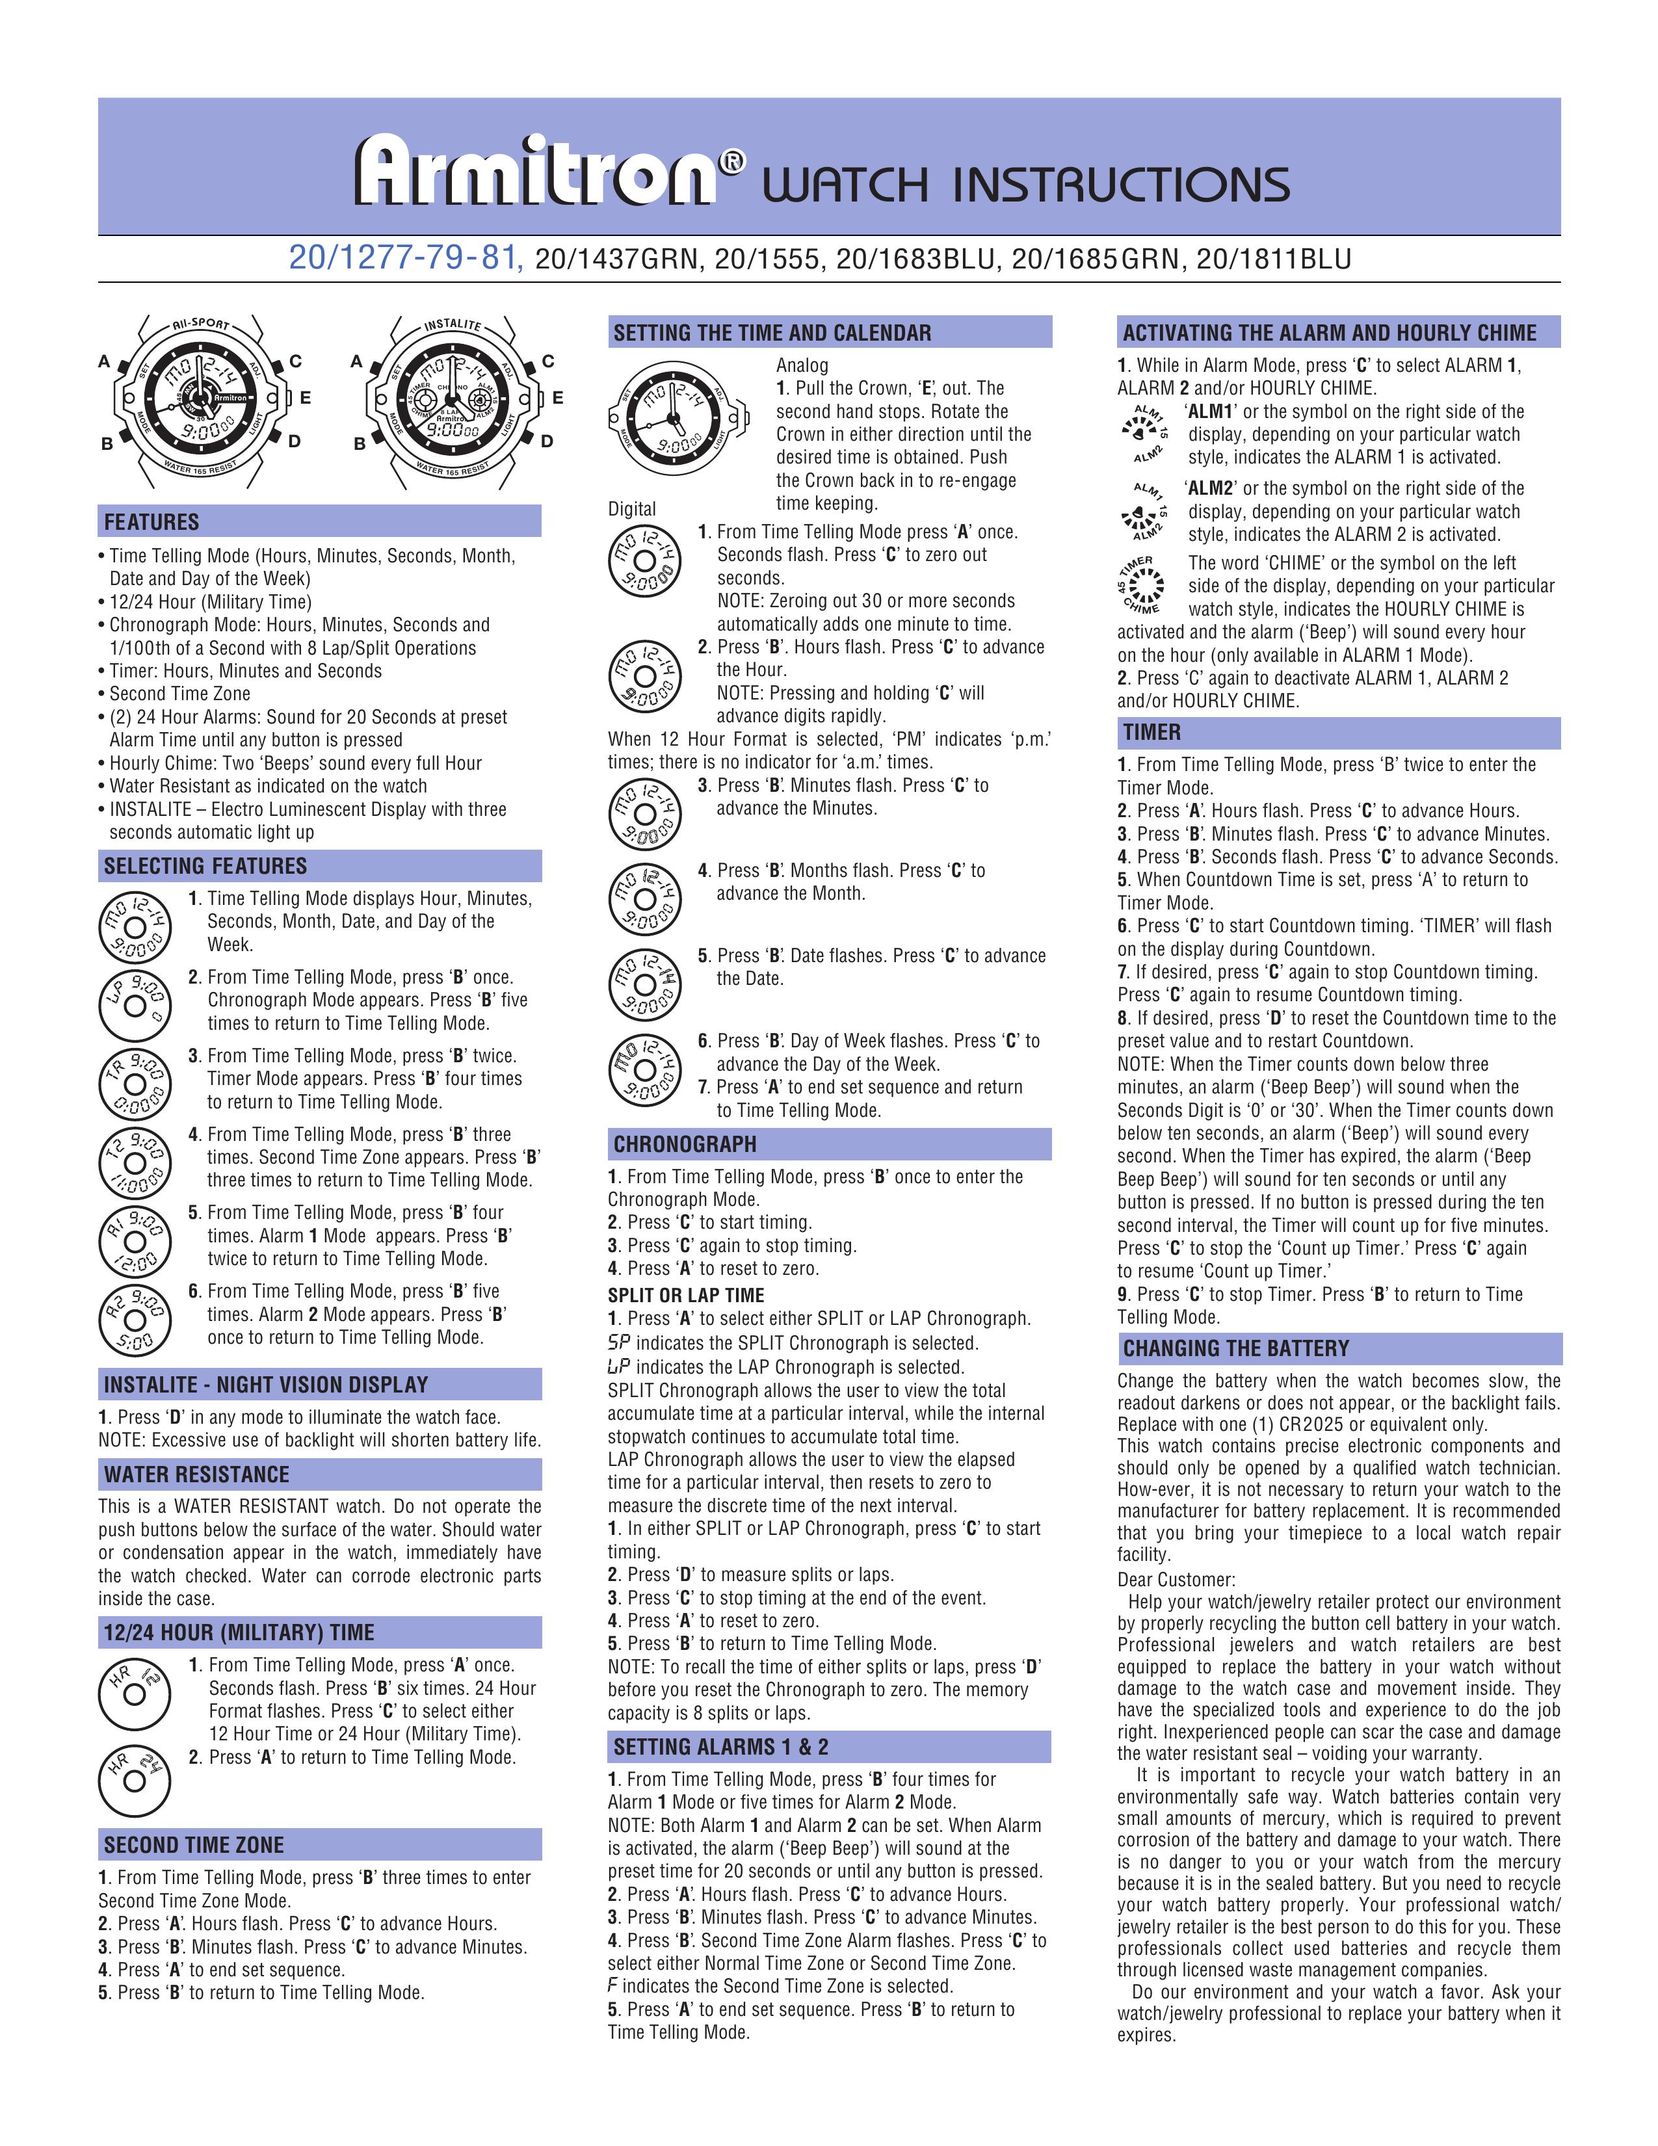 Armitron 20/1437GRN Watch User Manual